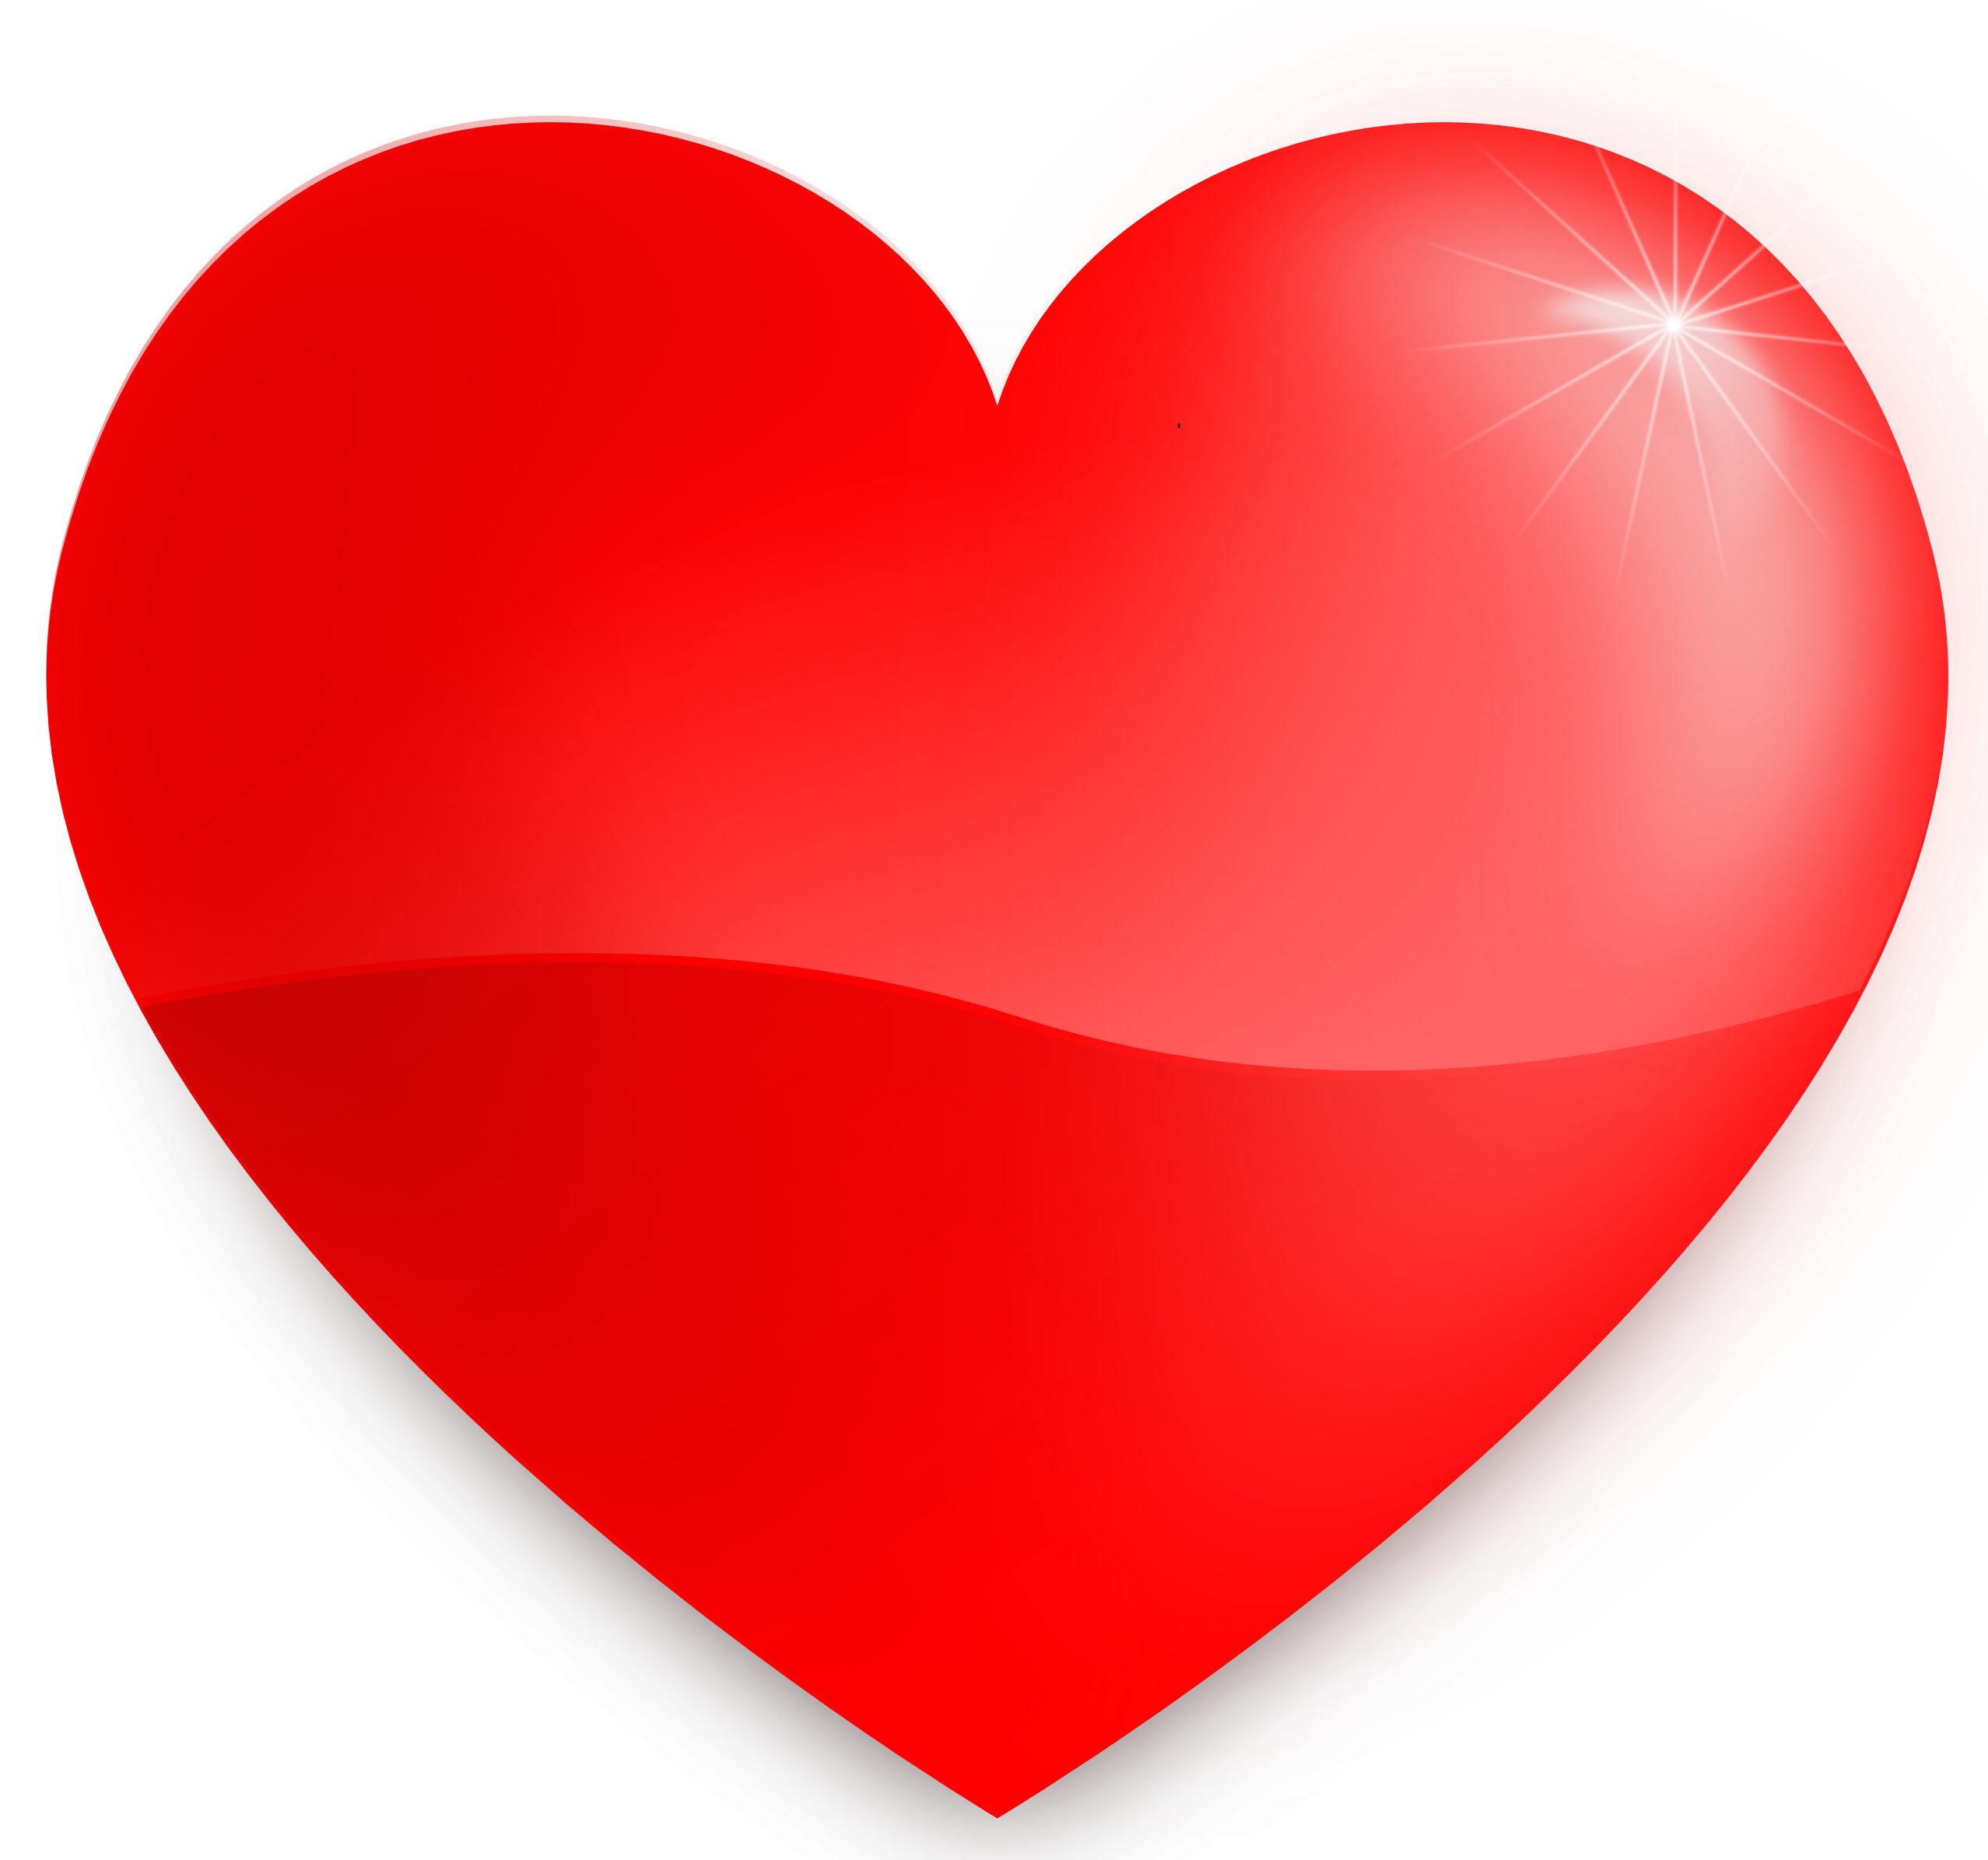 Twitter Emoji Heart PNG Background Image